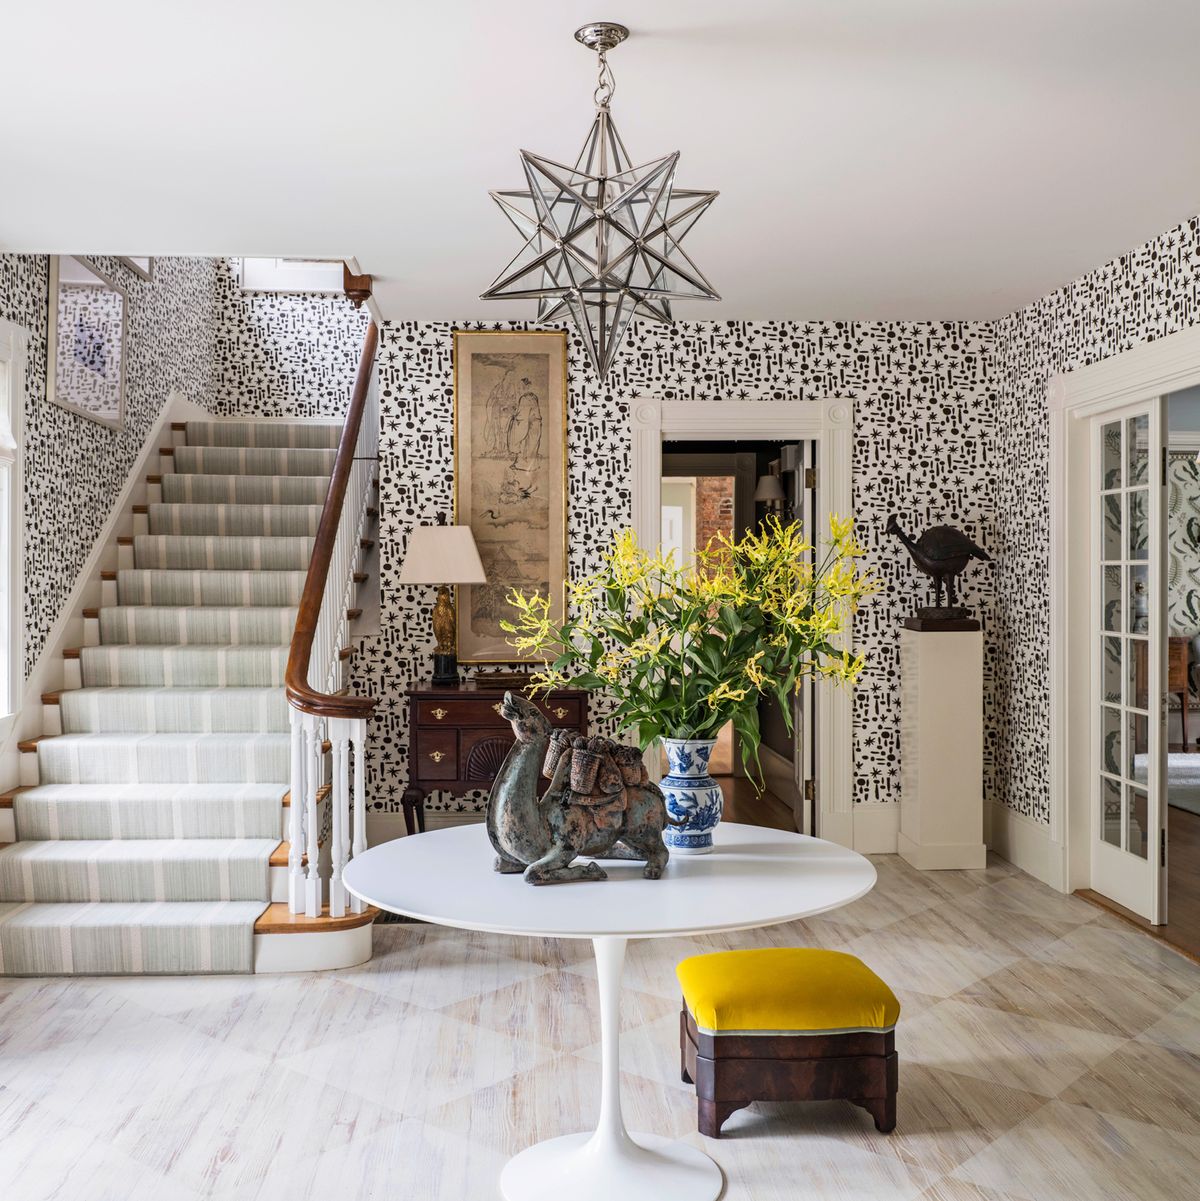 25 Wall Decor Ideas for Every Style and Budget - Bob Vila